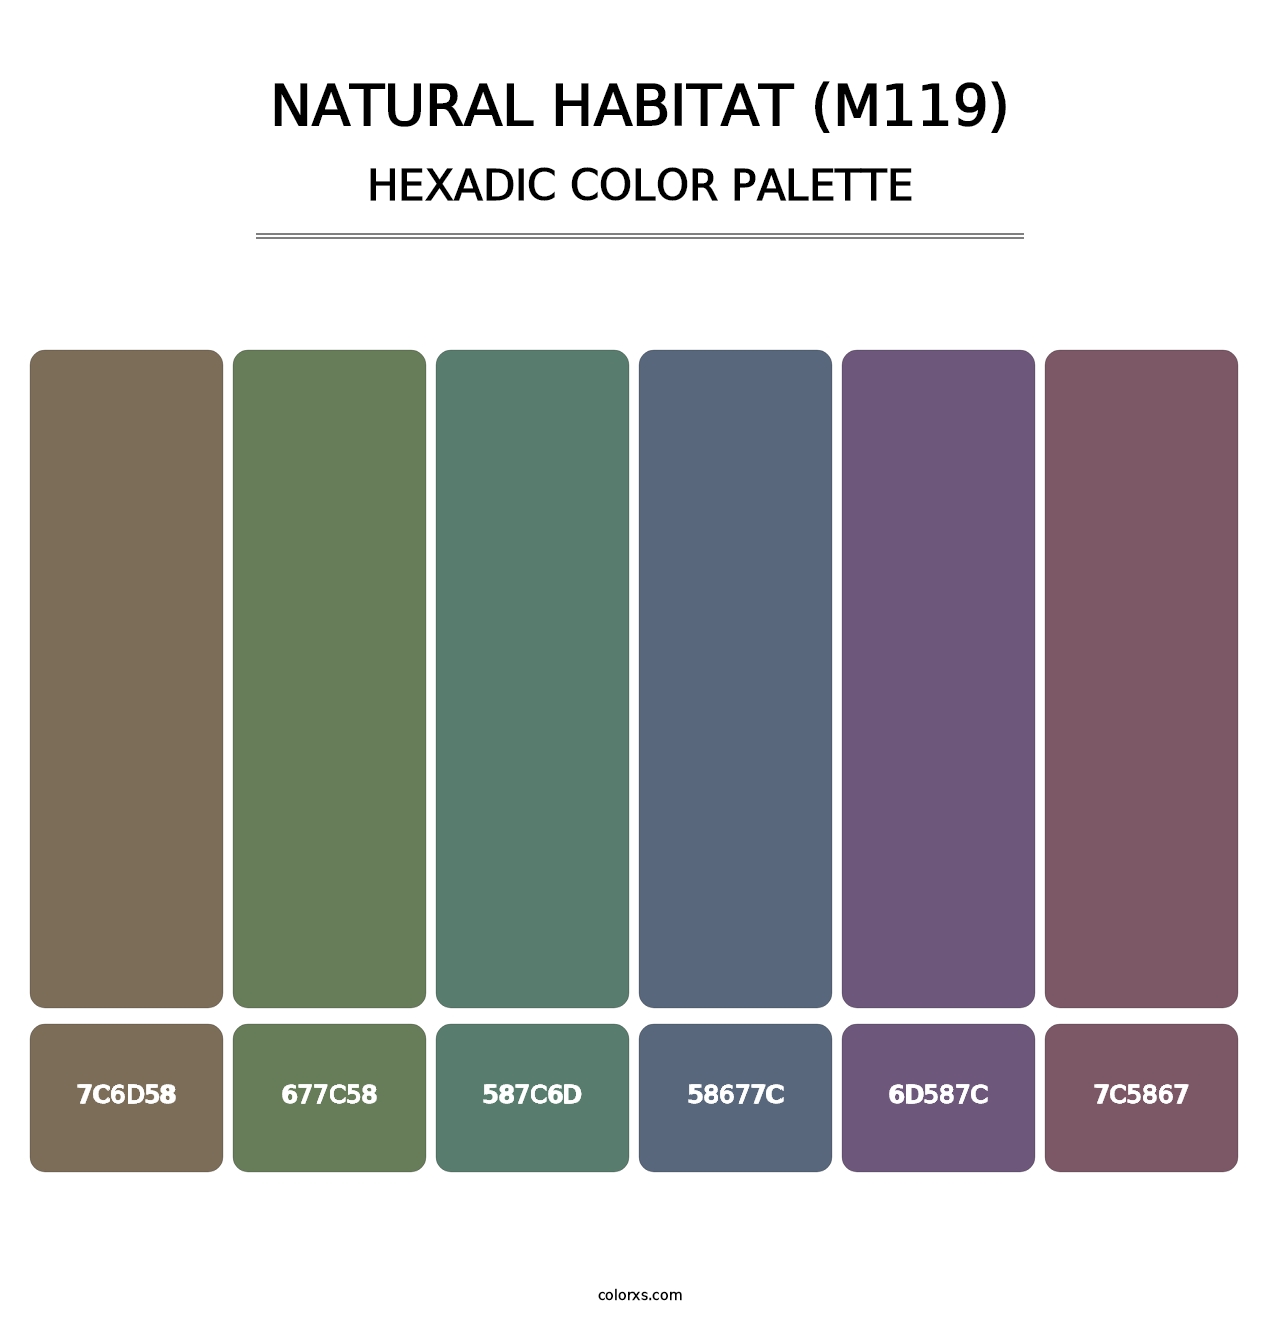 Natural Habitat (M119) - Hexadic Color Palette